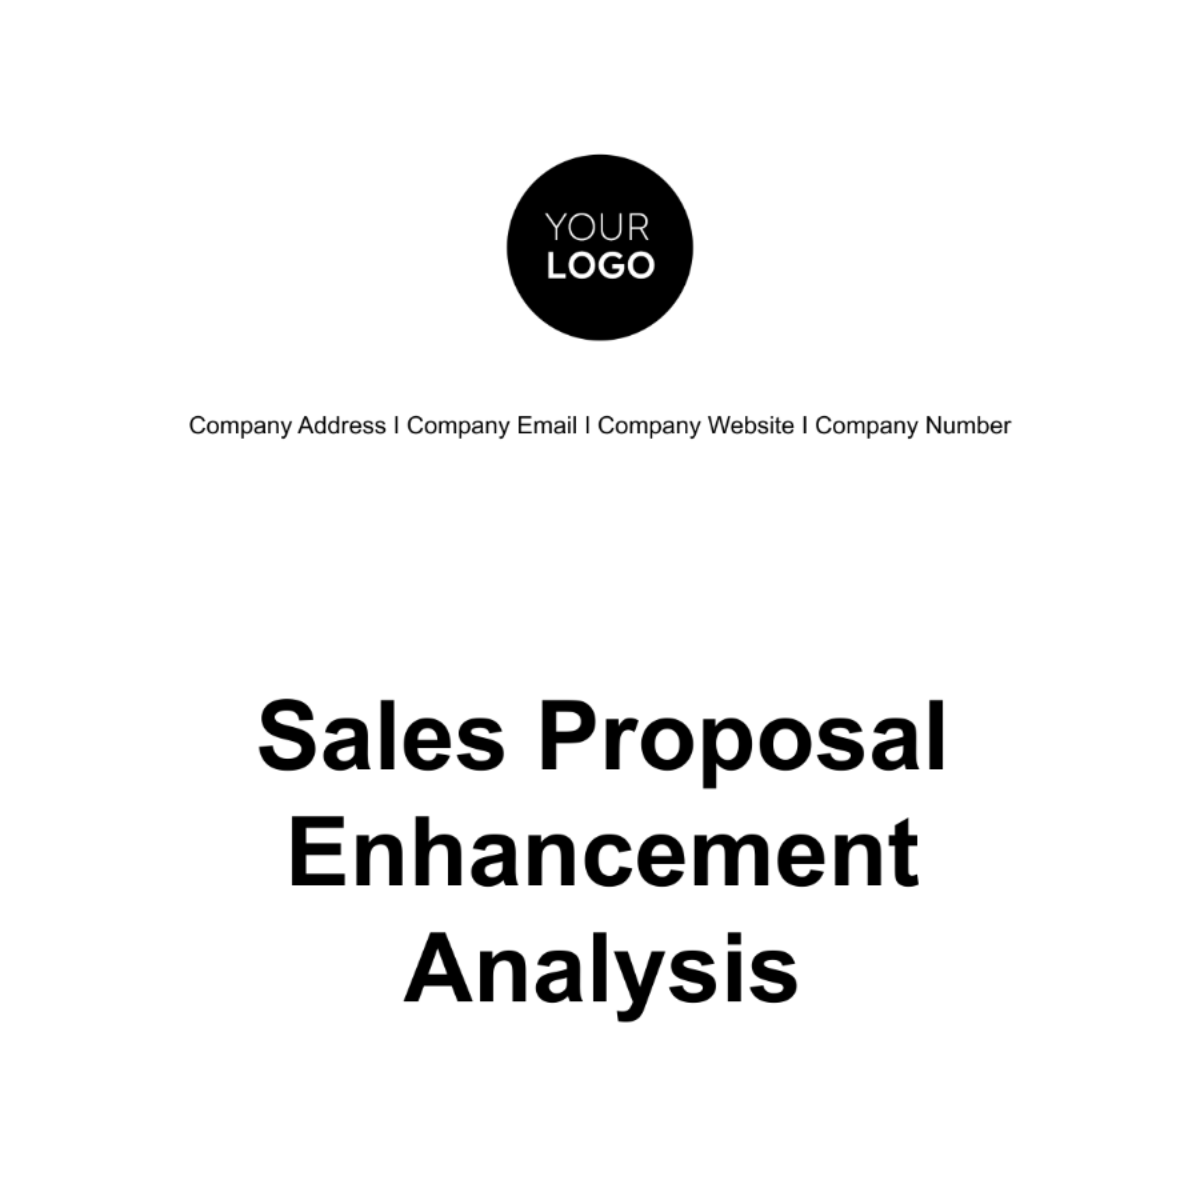 Free Sales Proposal Enhancement Analysis Template